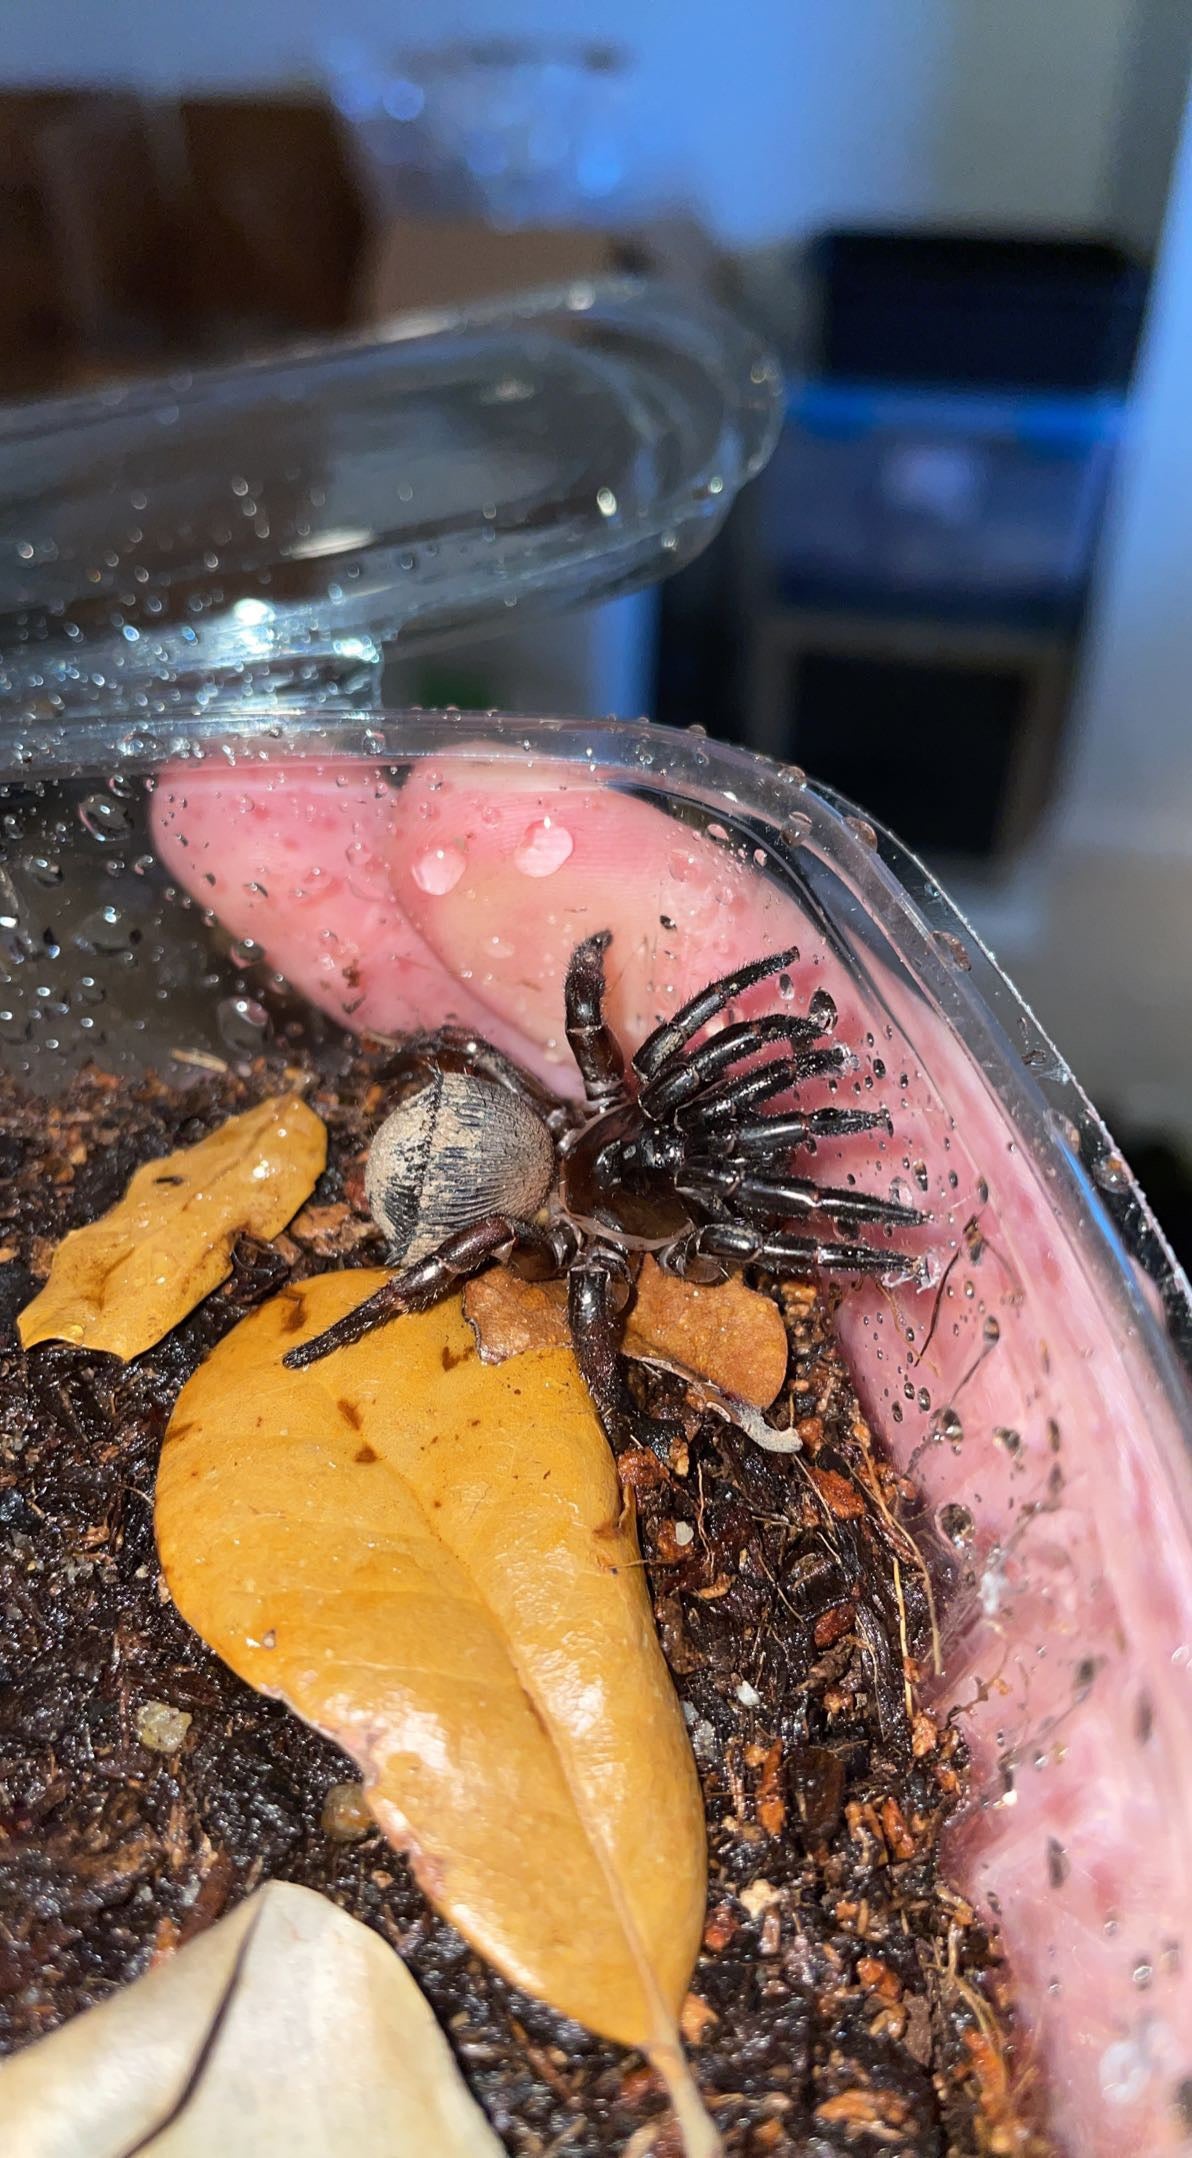 Florida Ravine Trapdoor Spider (Cyclocosmia torreya)